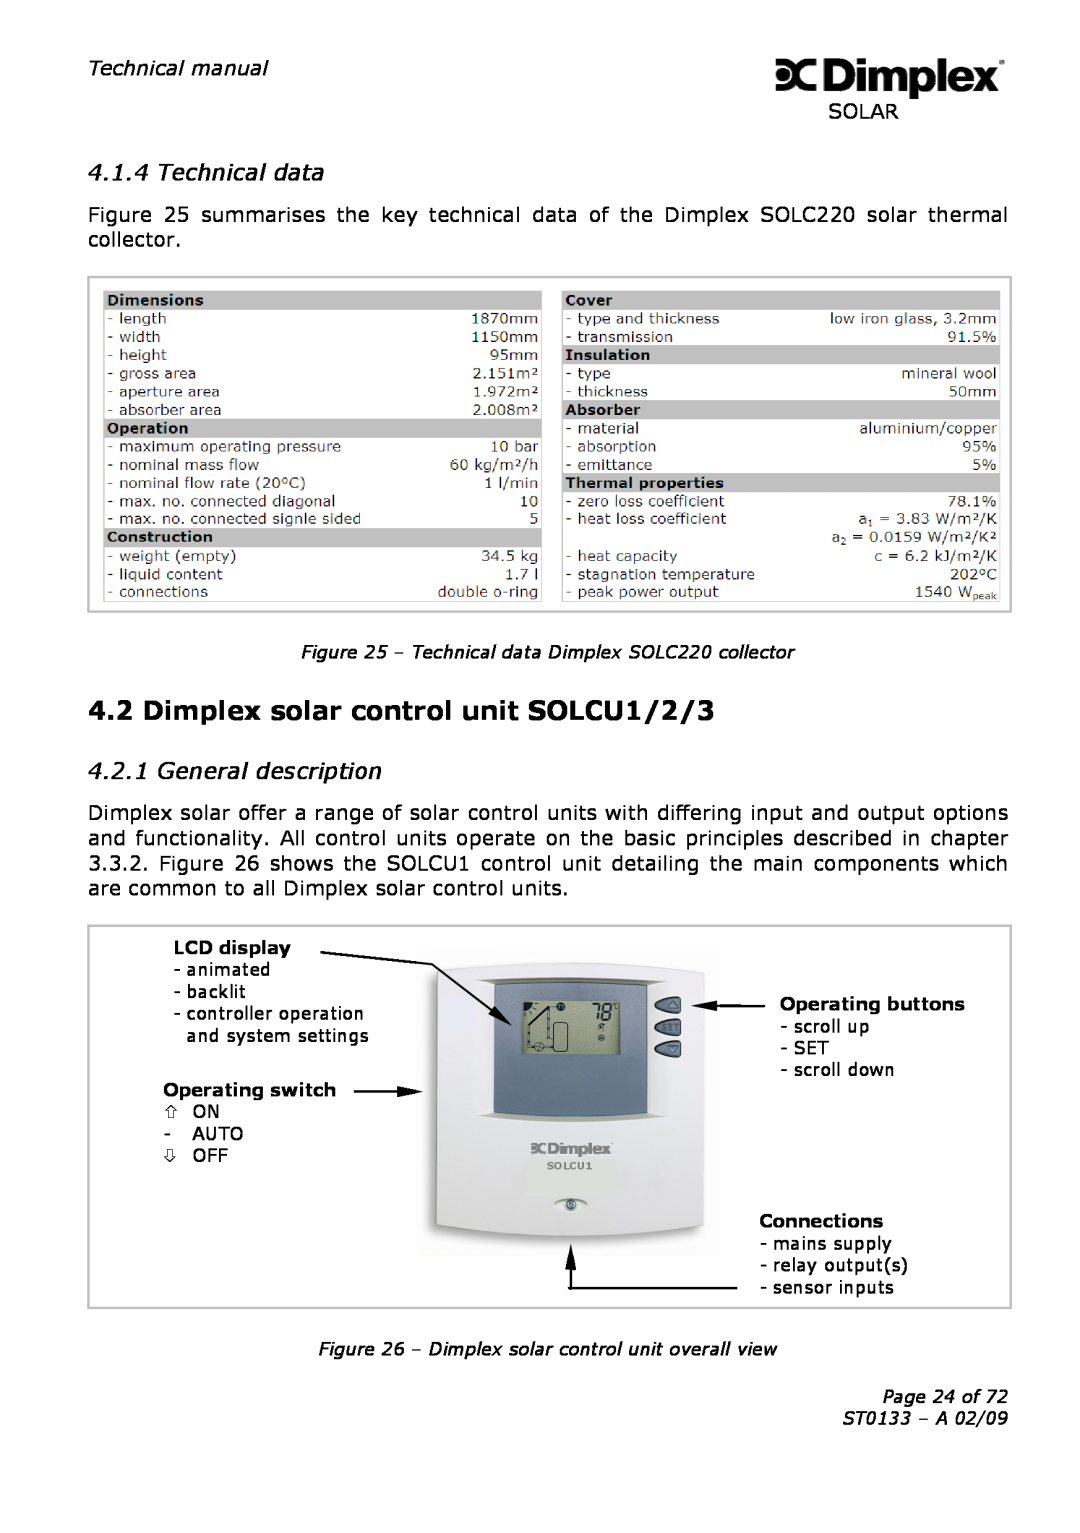 Dimplex ST0133 technical manual Dimplex solar control unit SOLCU1/2/3, Technical data, General description 